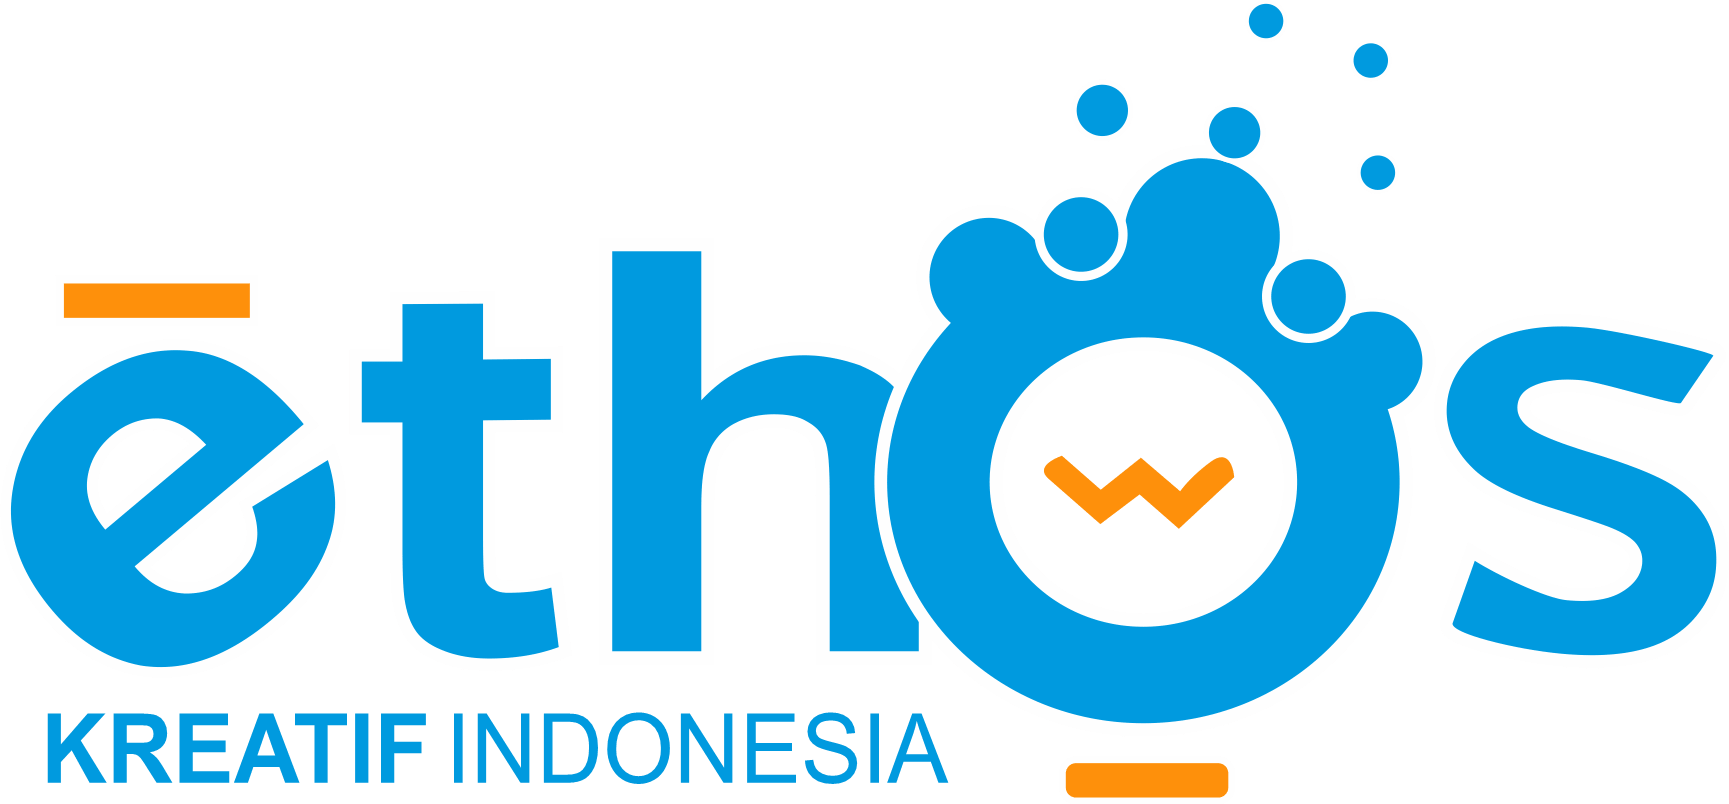 ethos kreatif indonesia